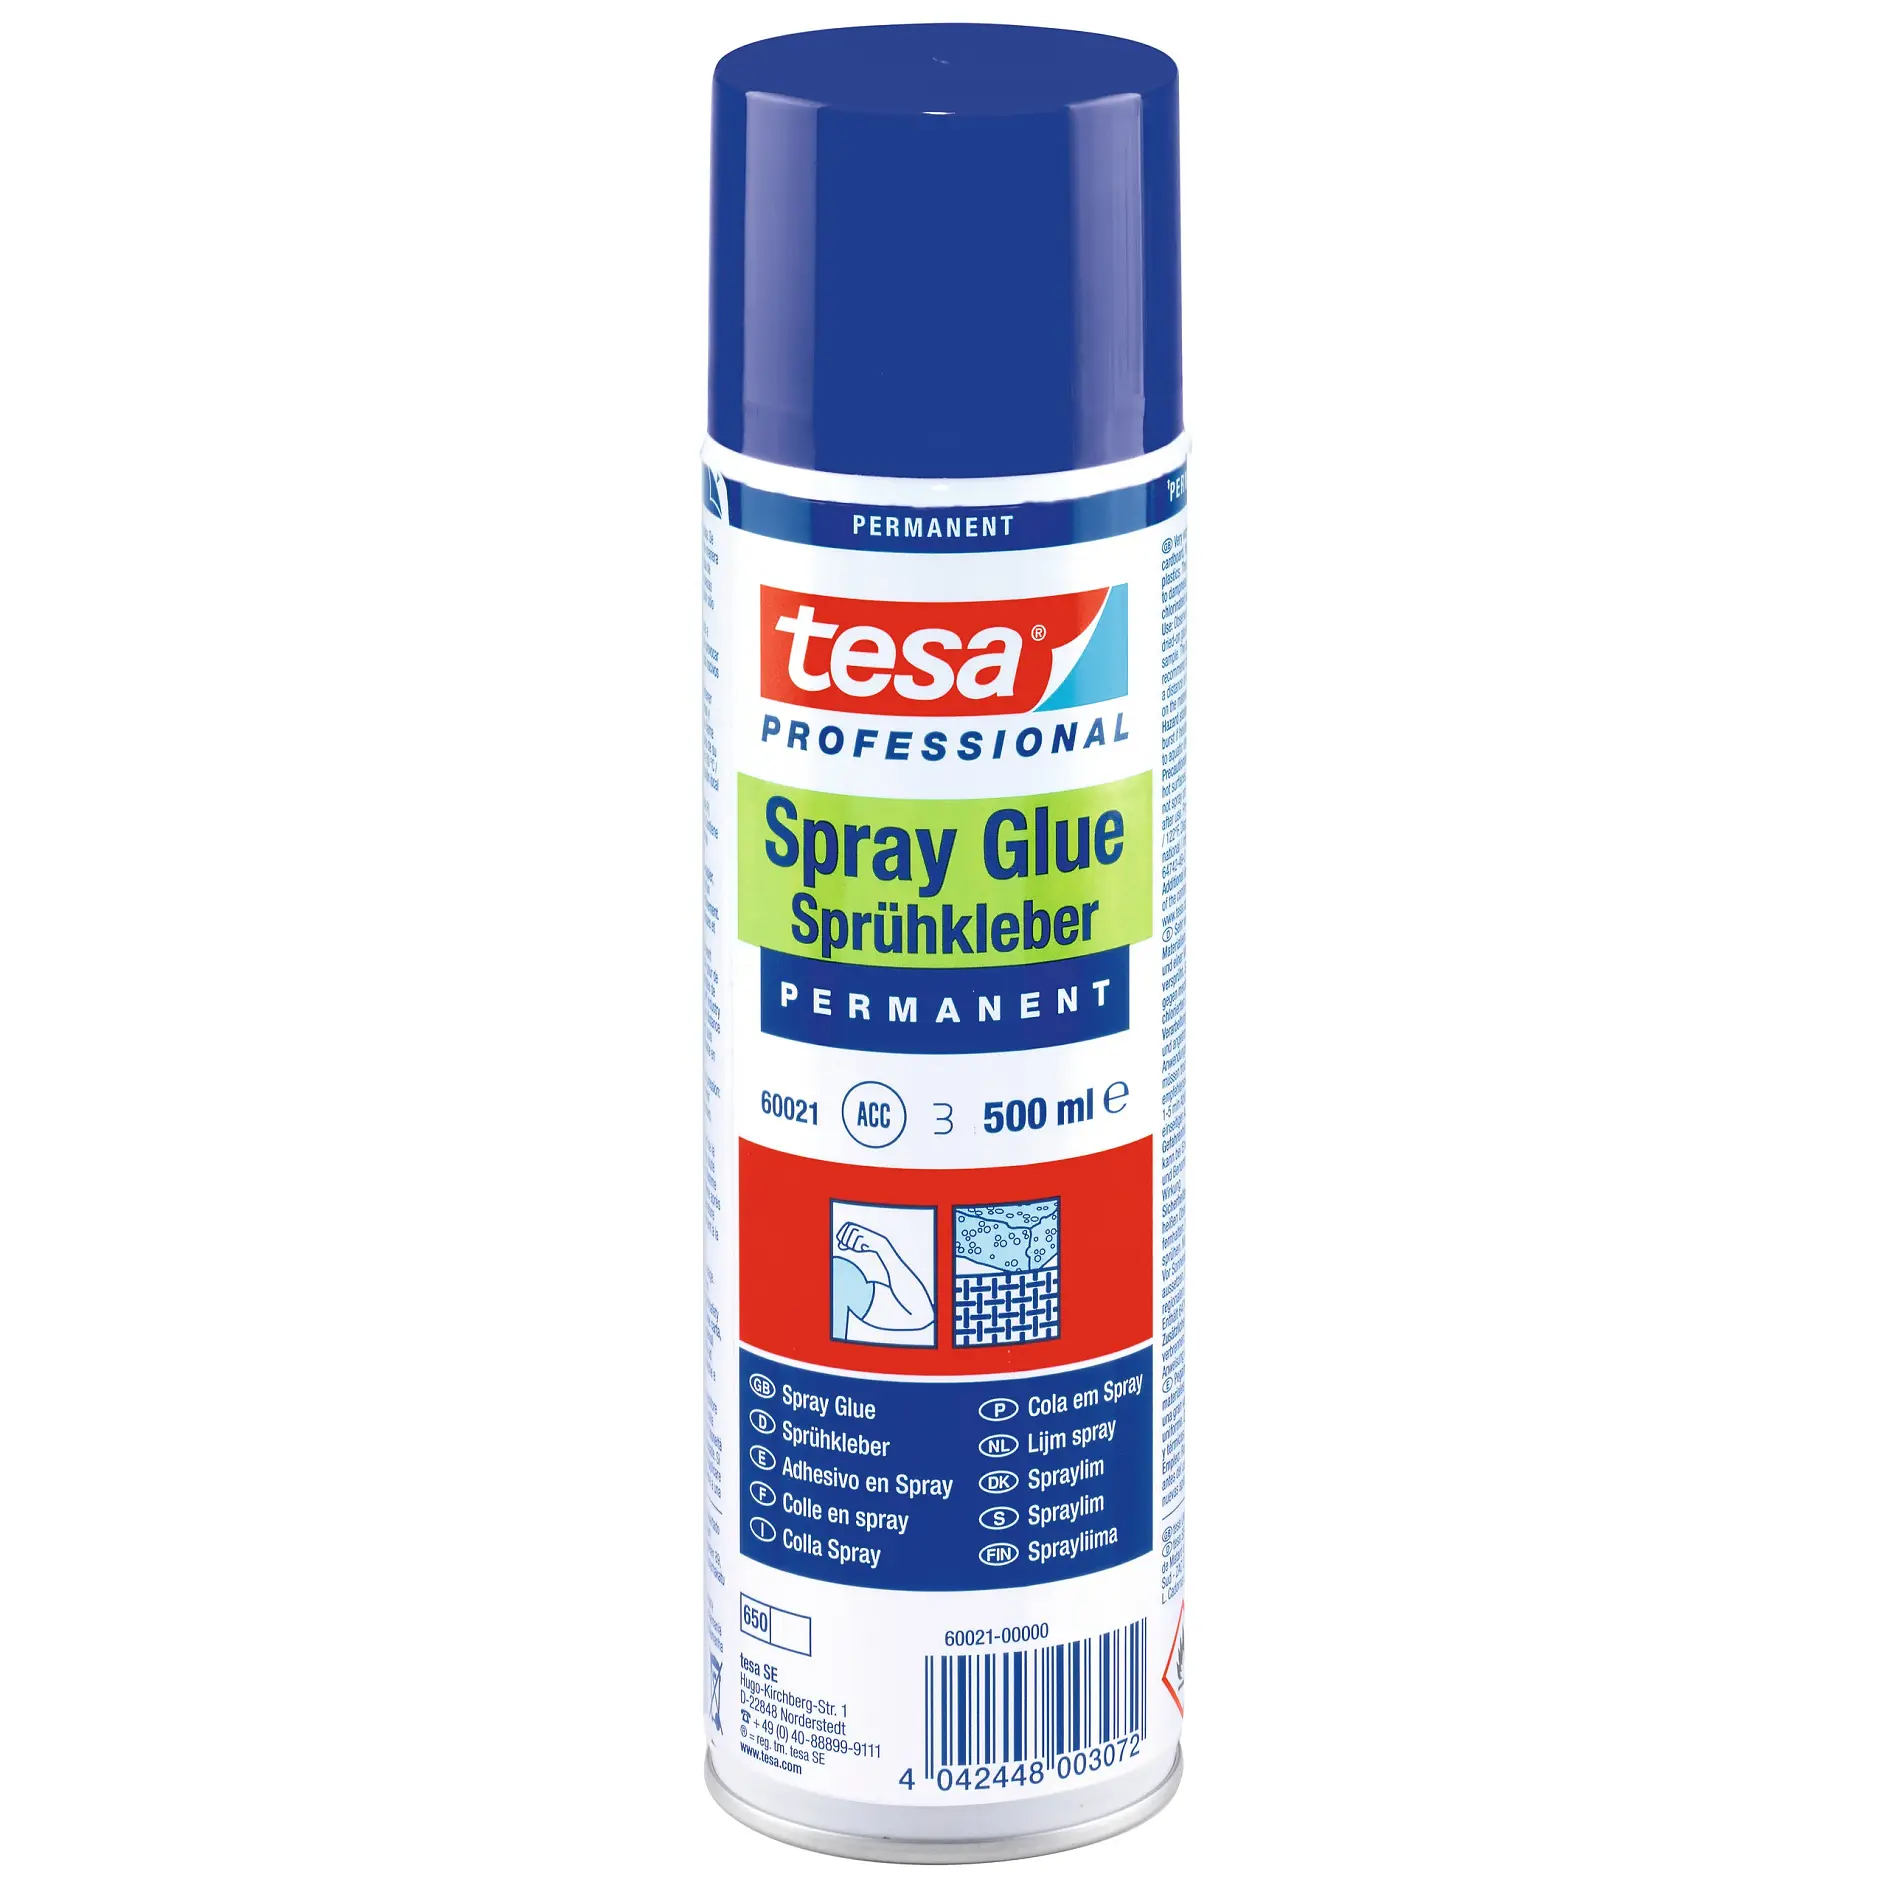 [en-en] tesa Professional Spray Glue Permanent LI602